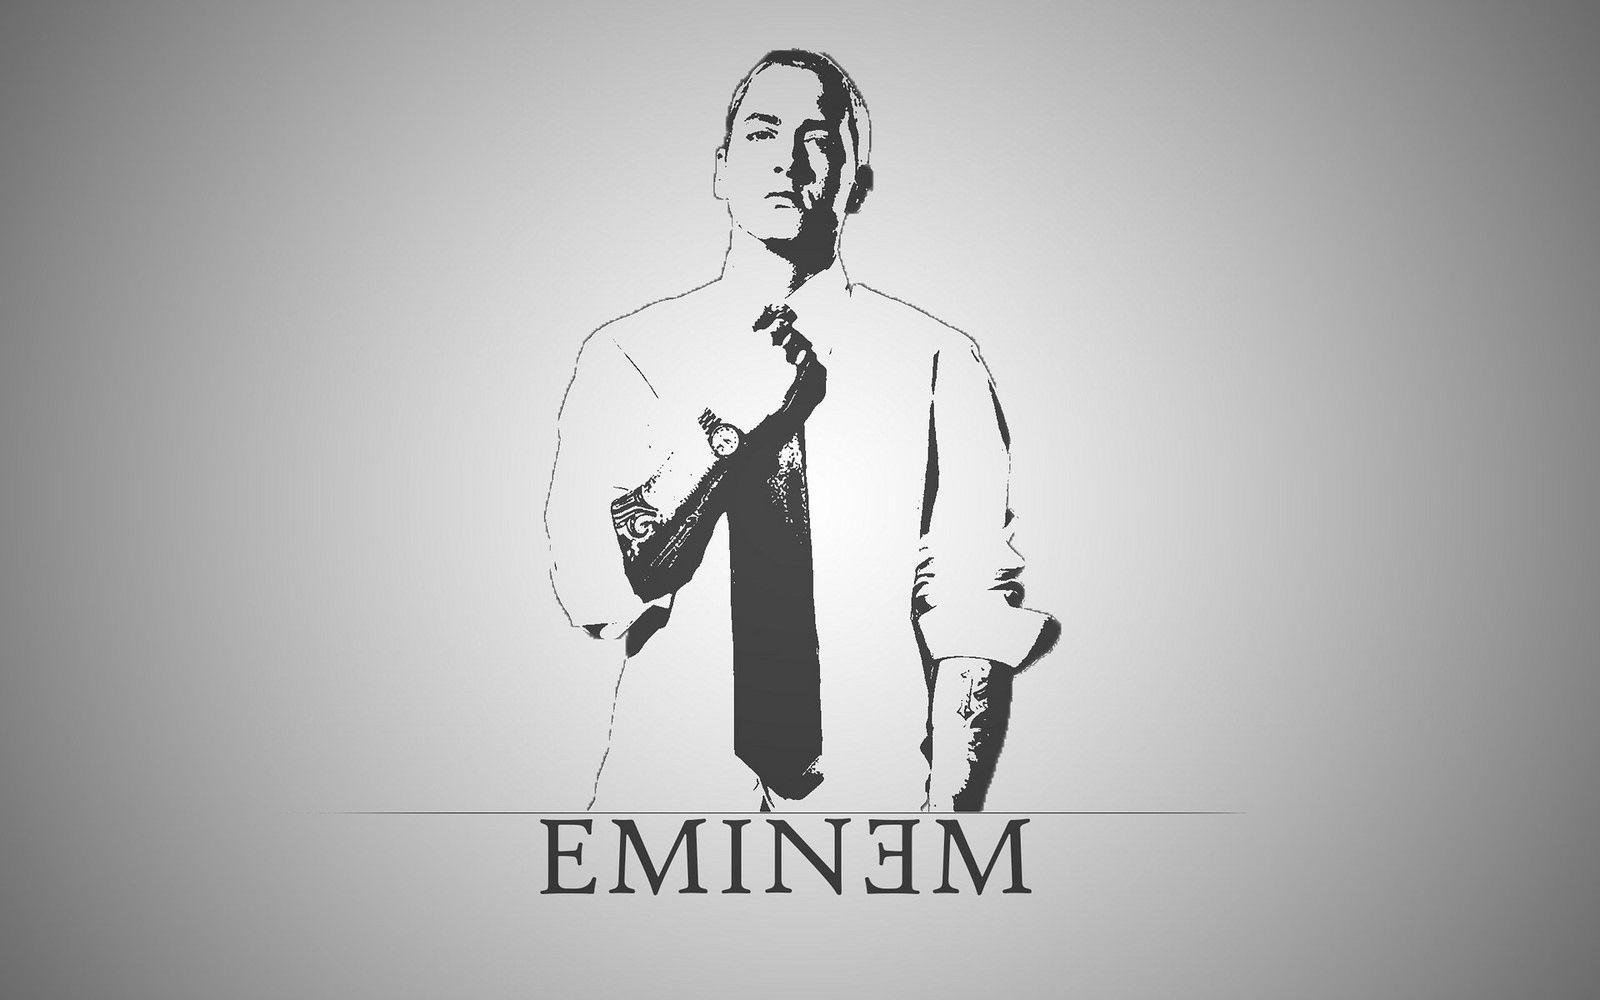 Eminem Black and White Logo - Is Eminem Dad Rock?